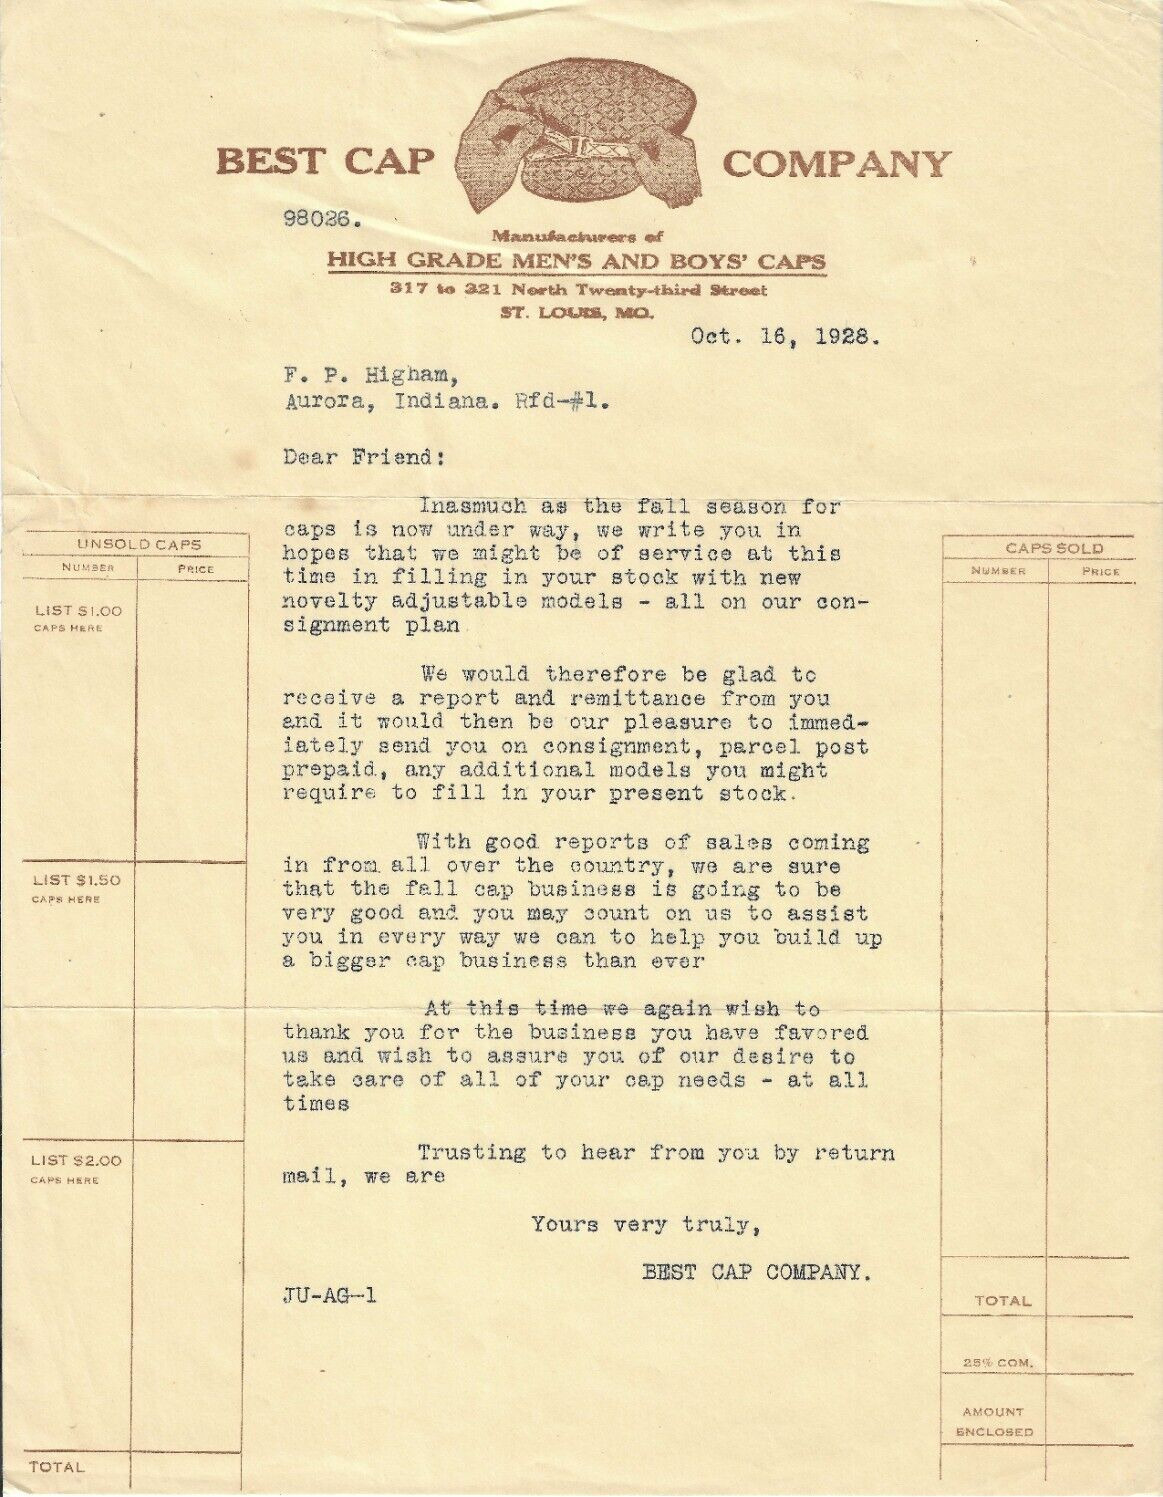 1928, Letter to F.P Higham Aurora Indiana, Best Cap Company, St. Louis, Missouri